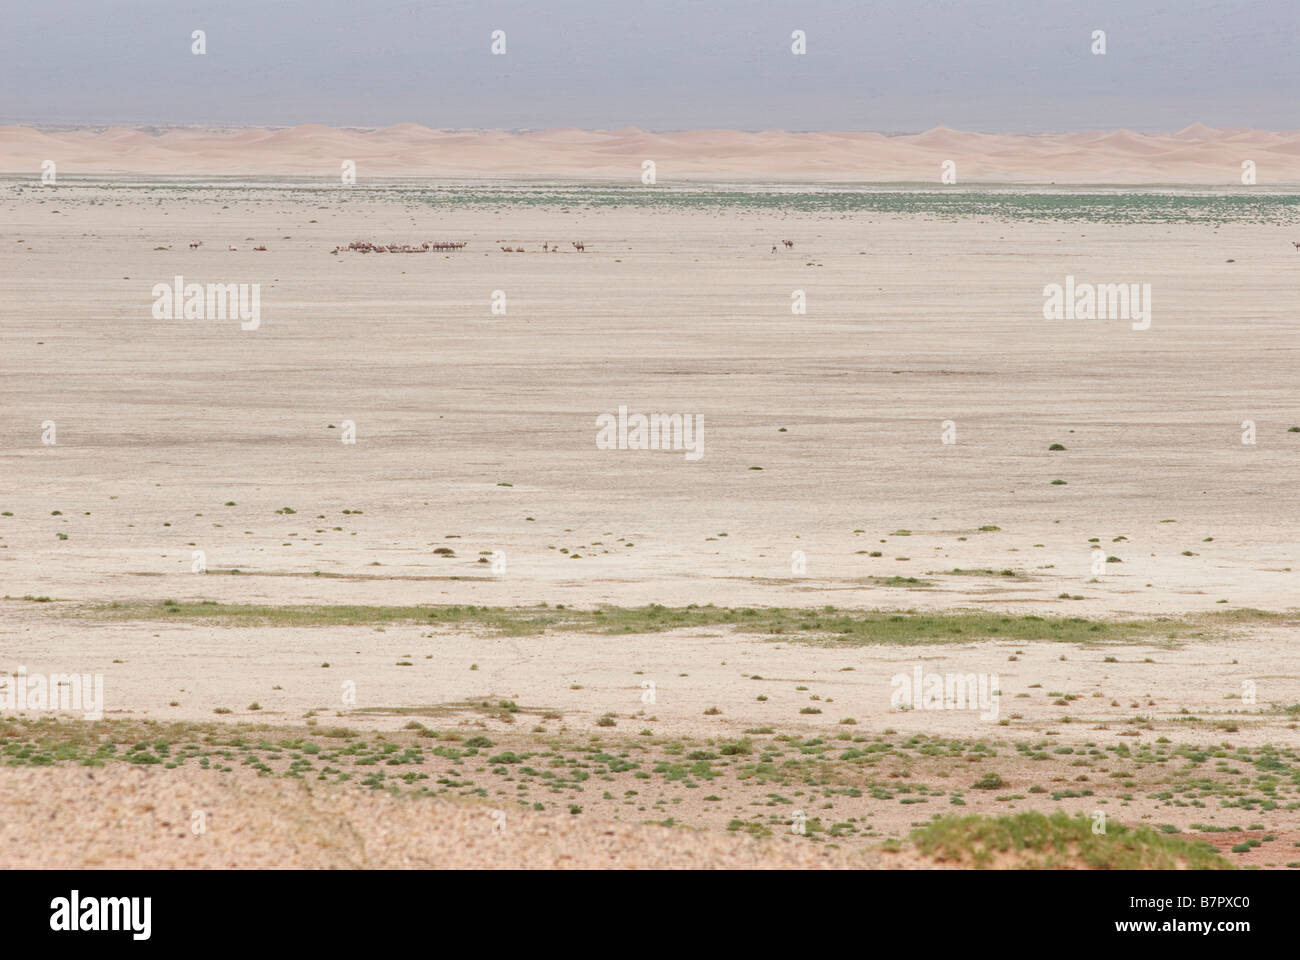 Bactrian camels in Gobi Desert Stock Photo